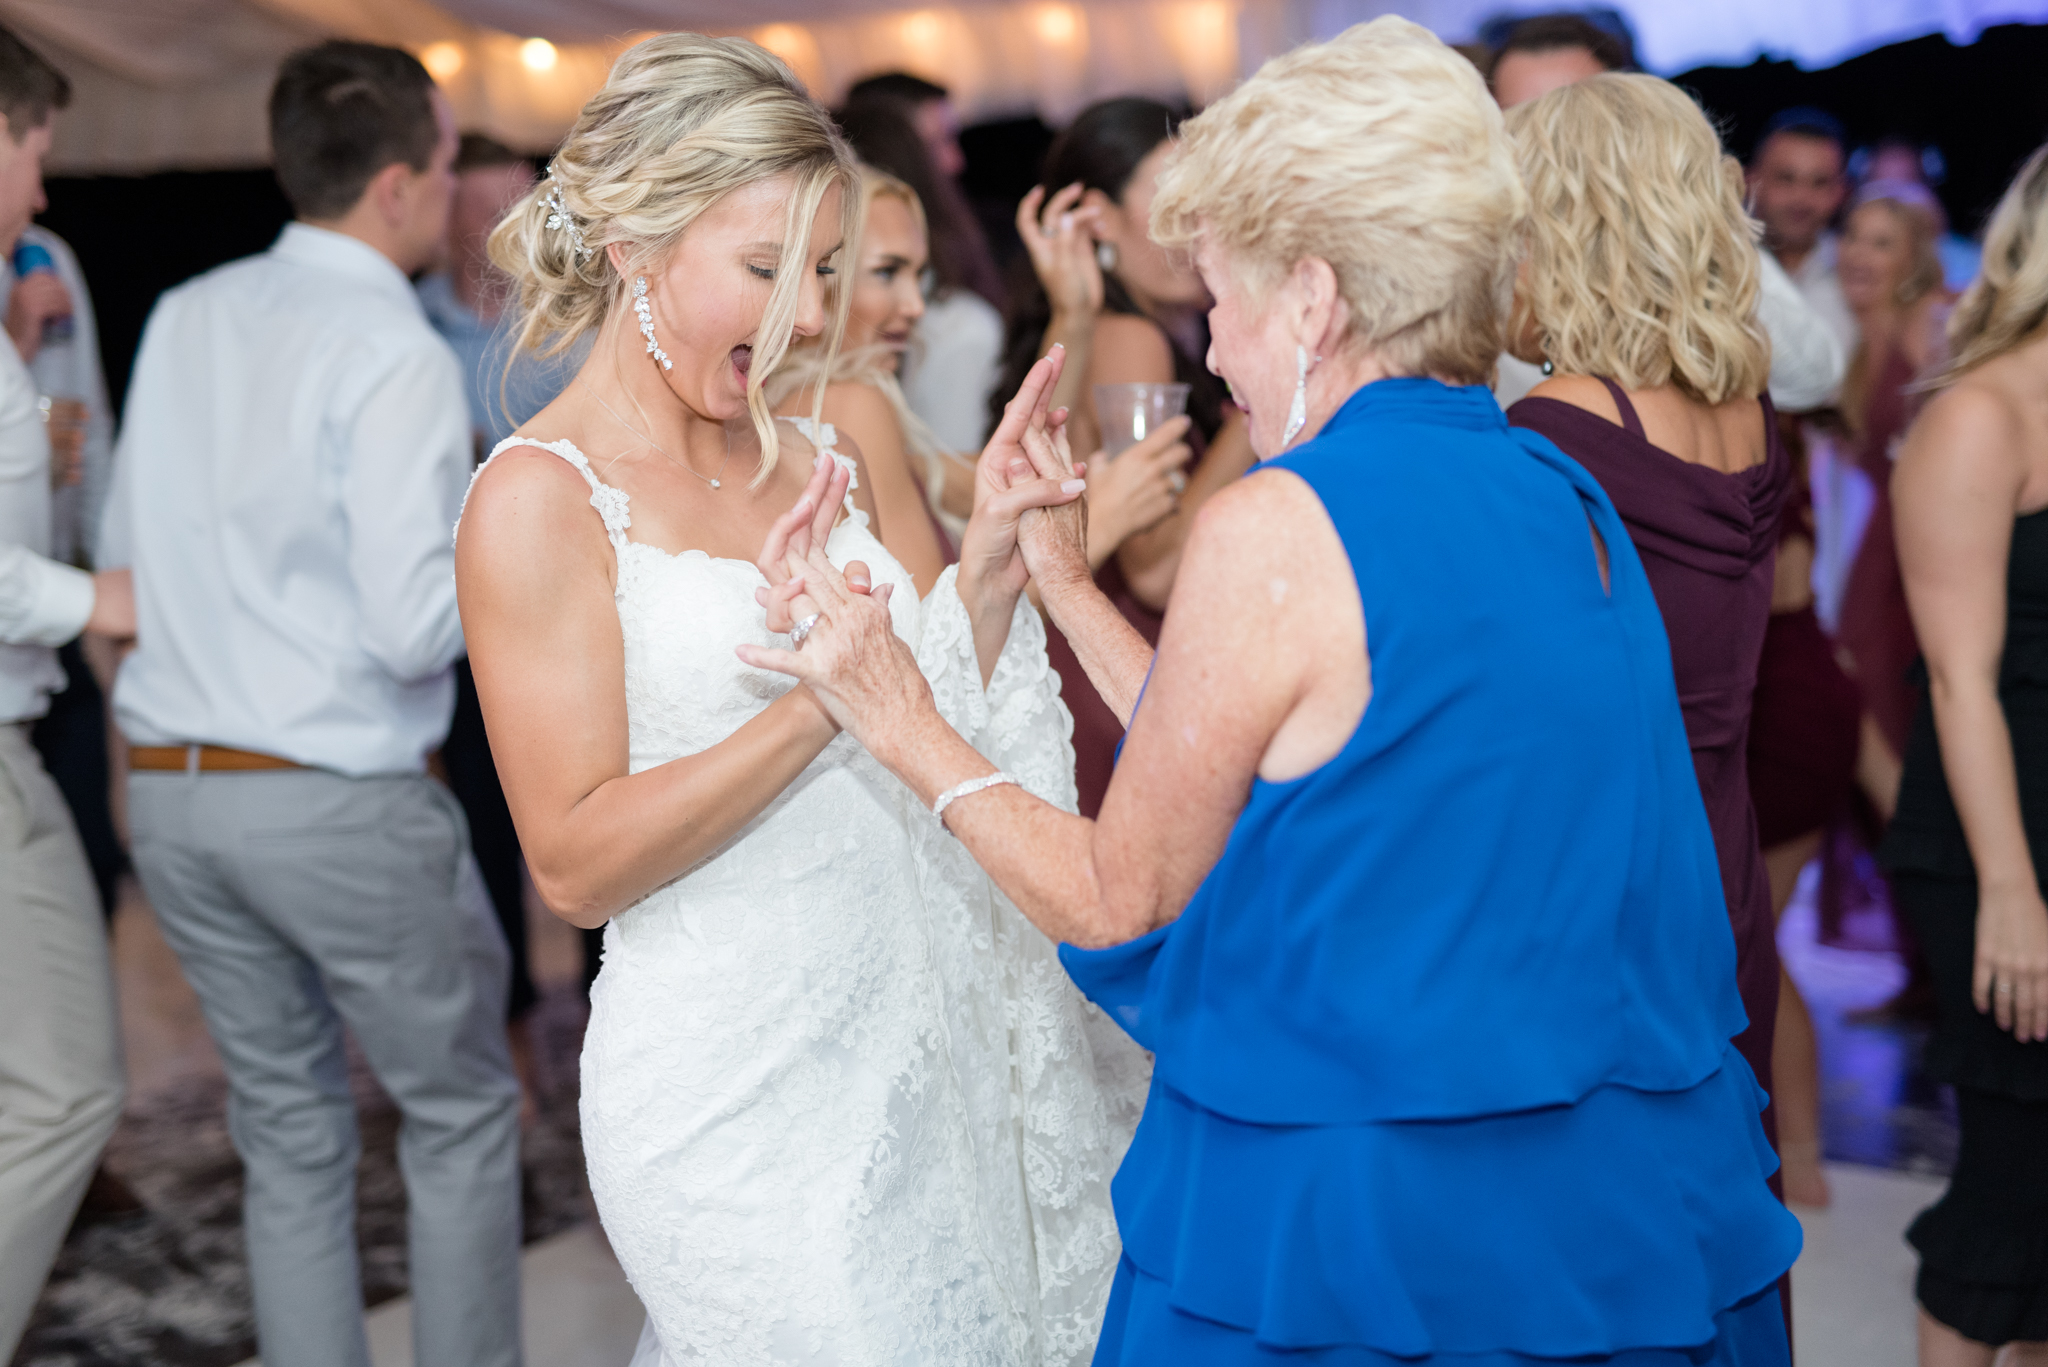 Bride and grandmother dance together.